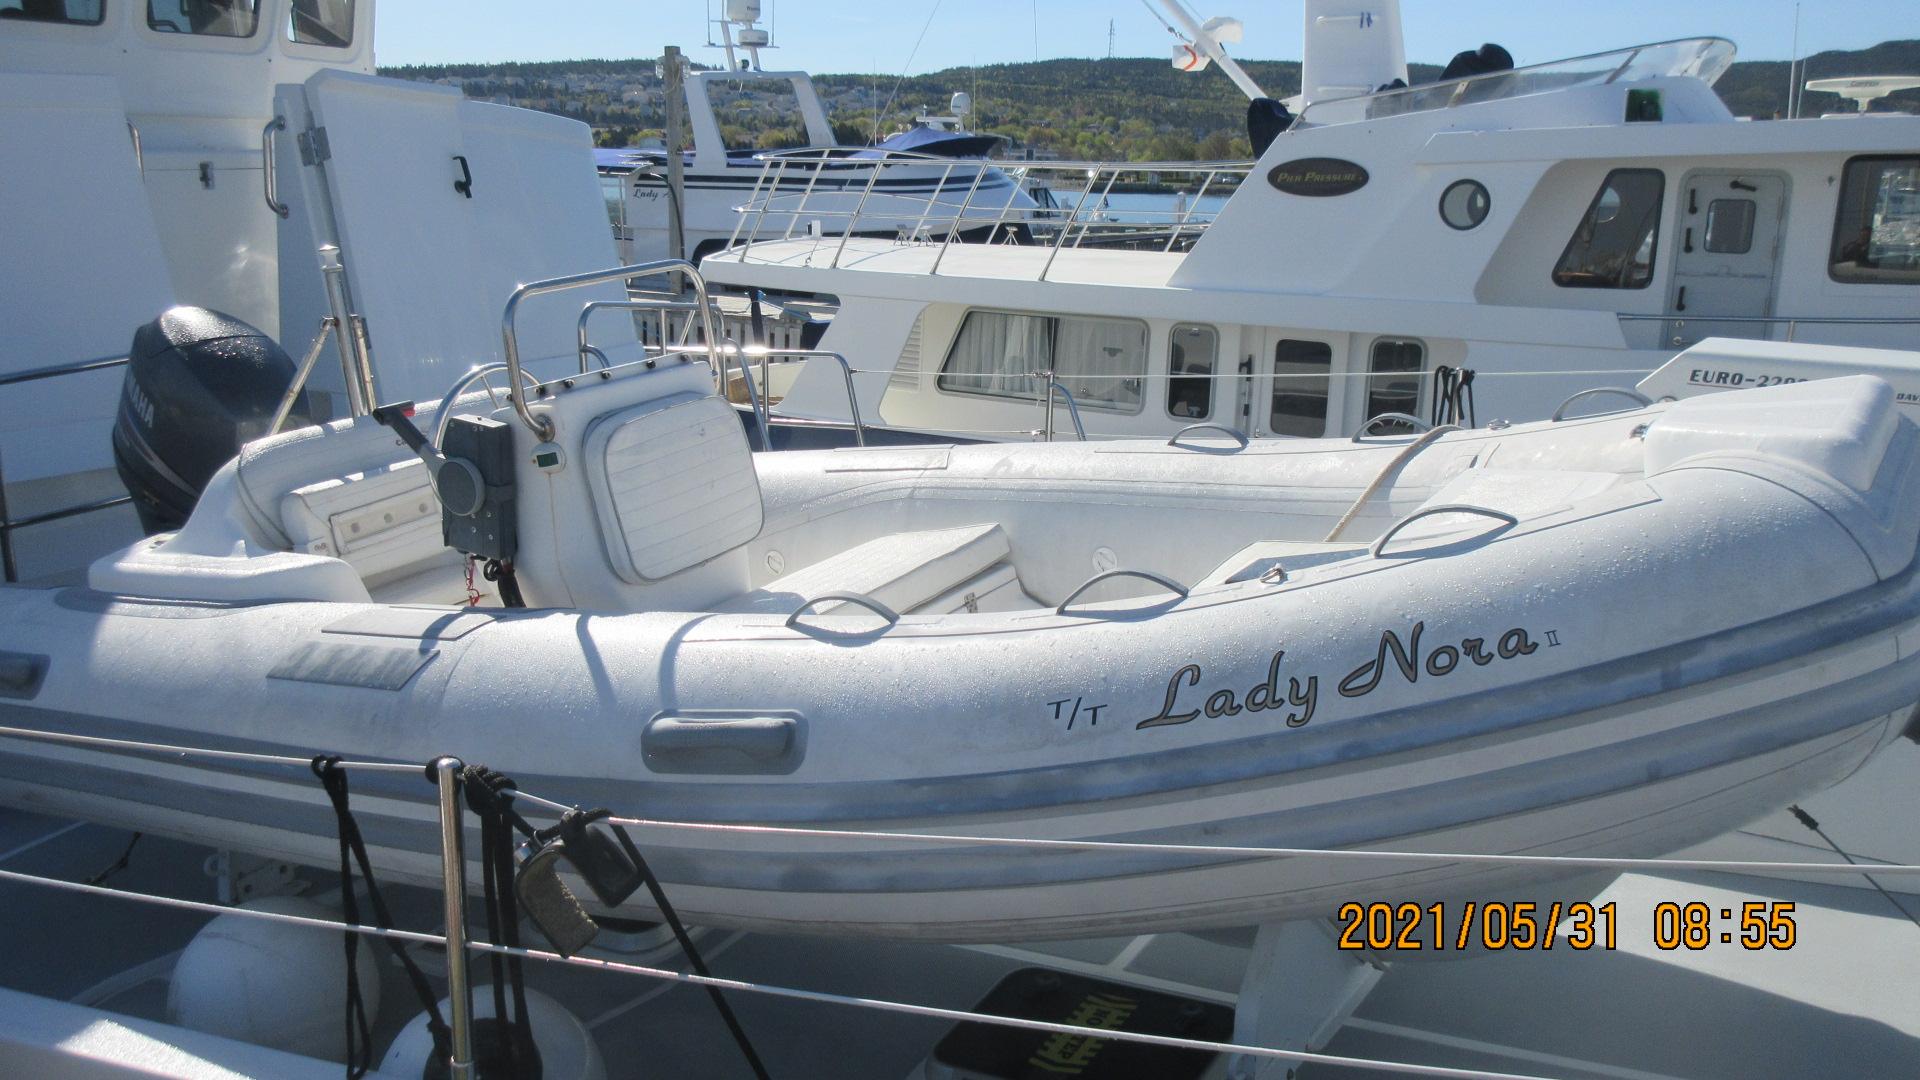 Lady Nora II Yacht Photos Pics 